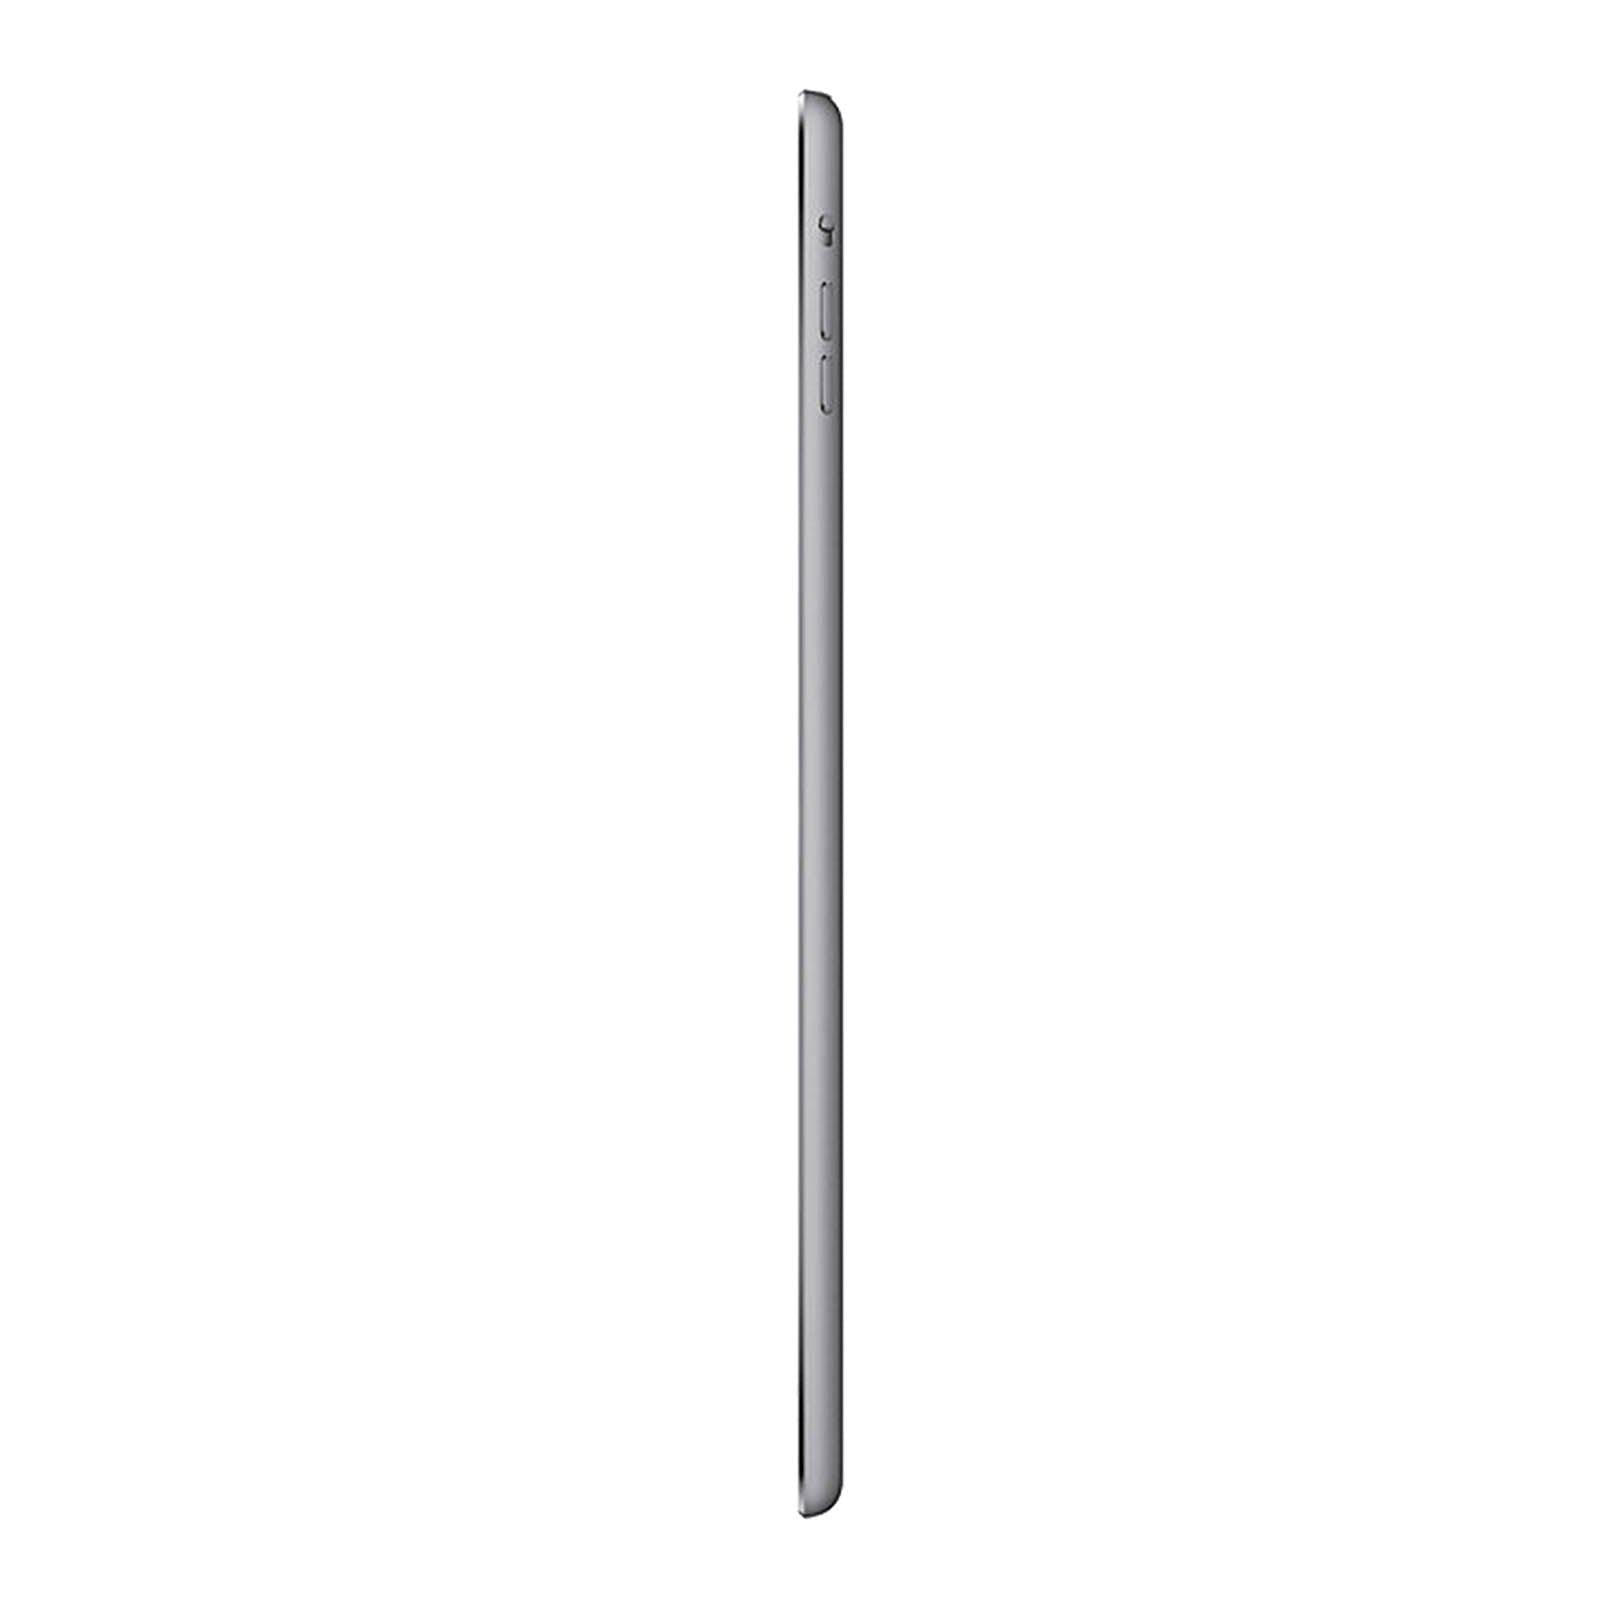 iPad Air 32GB WiFi & Cellular Space Grey FAir 32GB-Unlocked